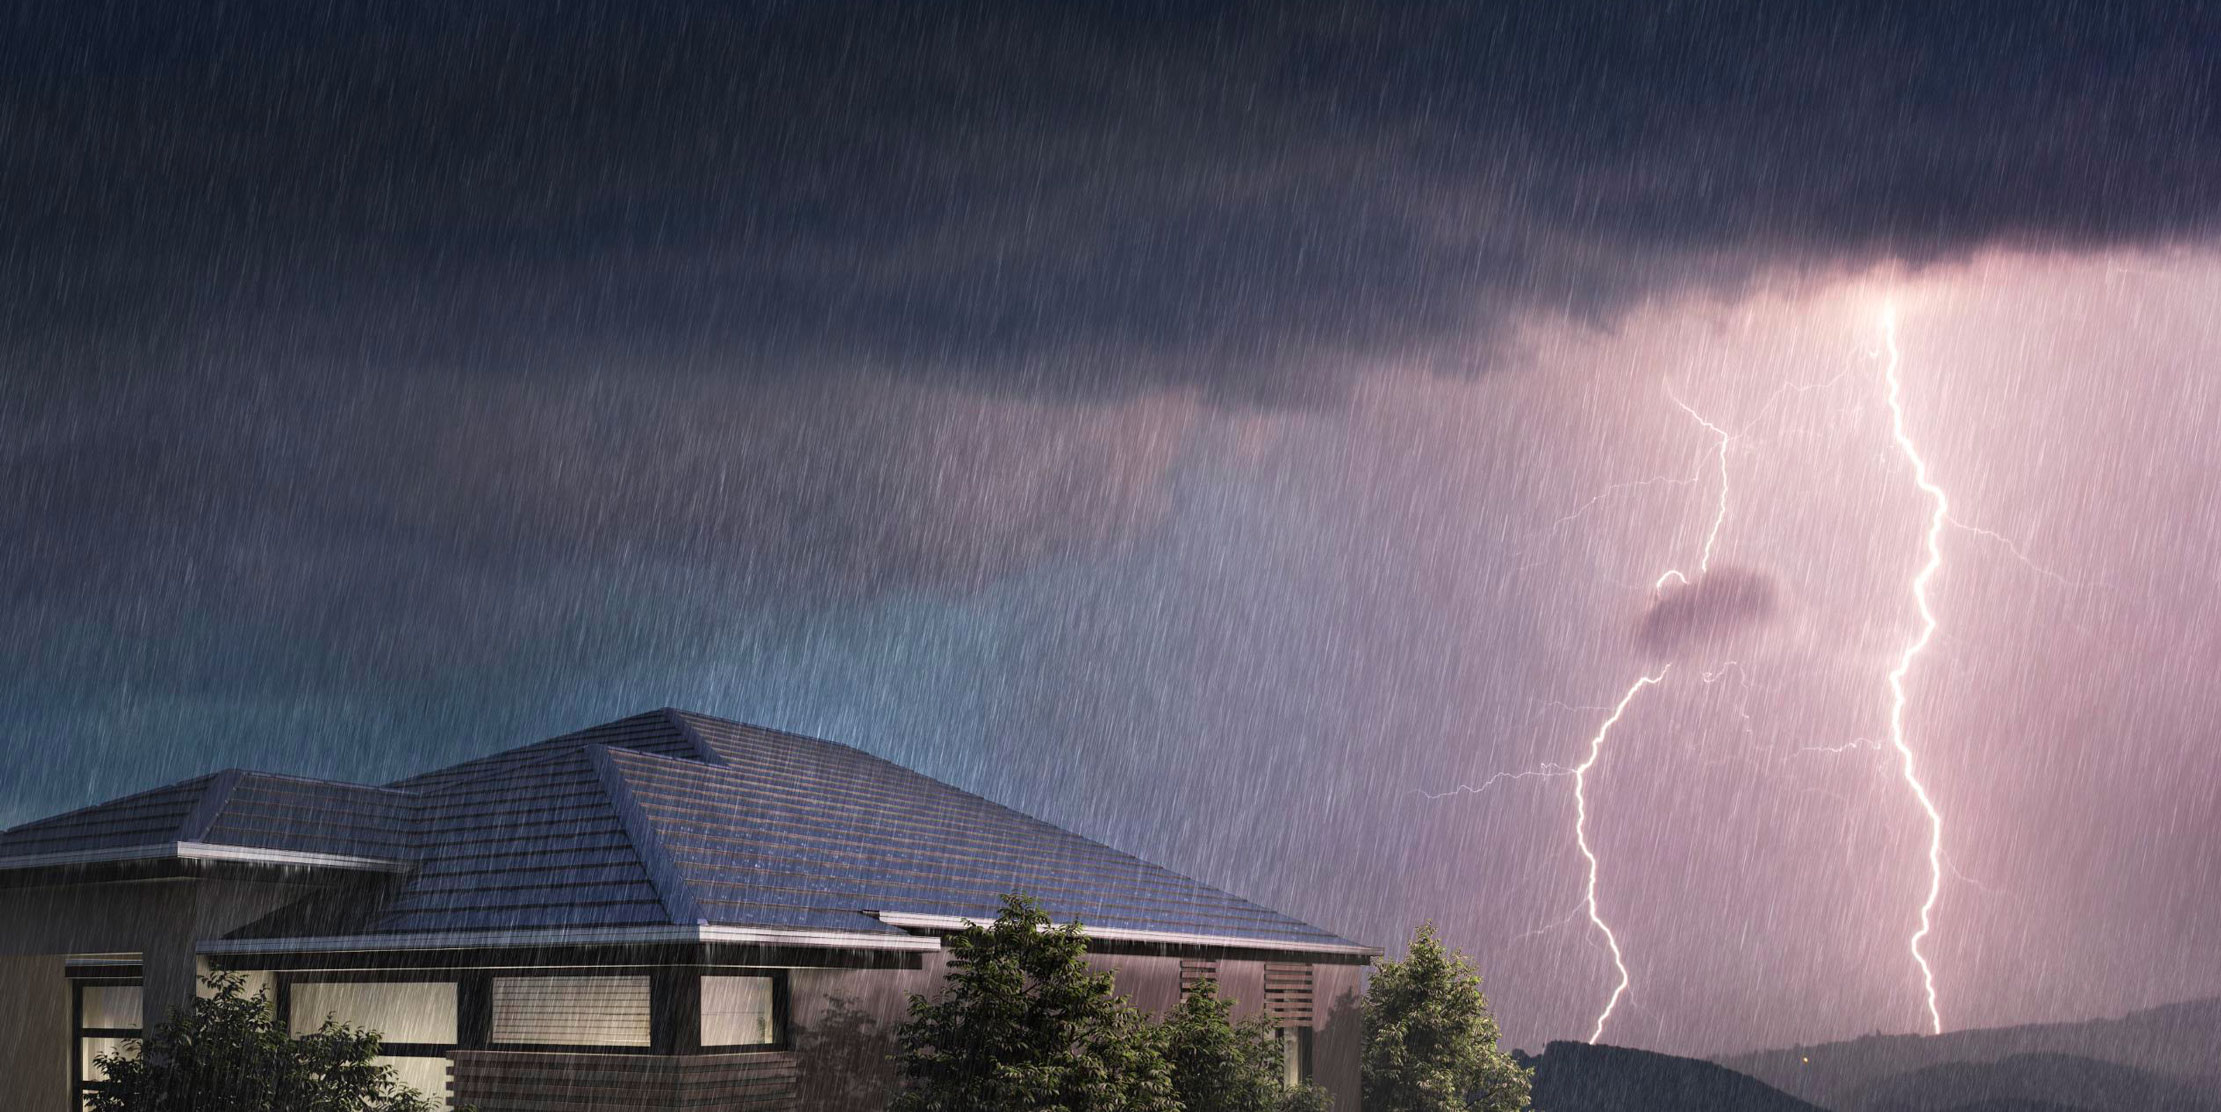 Storm Season - Check Your Roof | Monier Blog